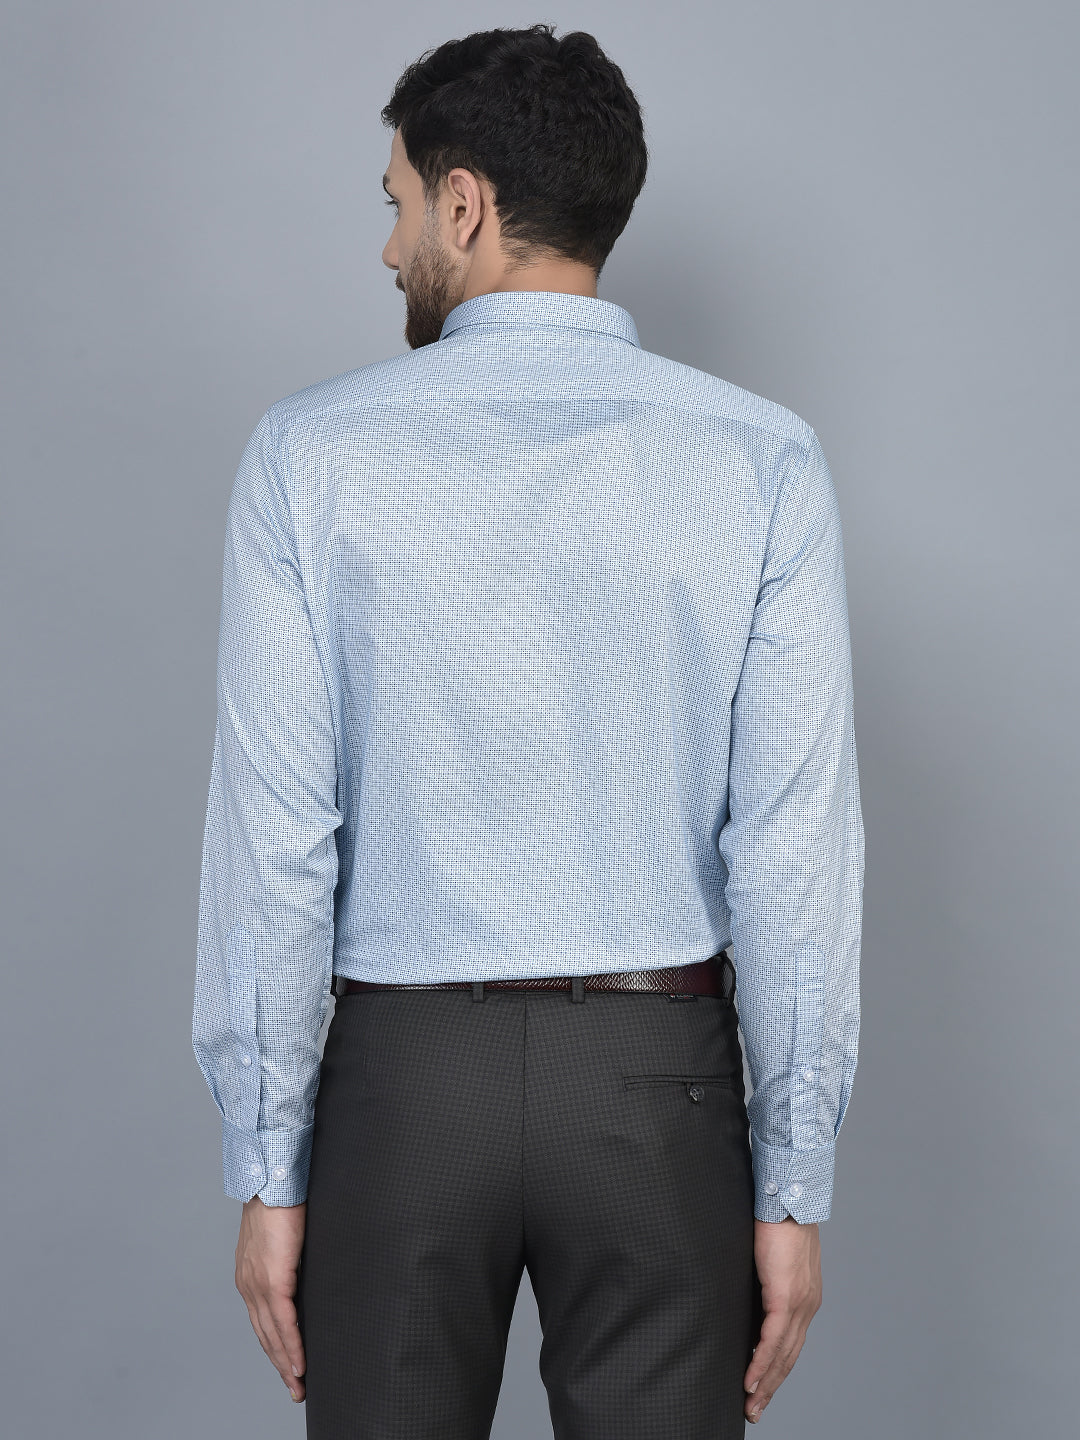 Cobb Sky Blue Printed Slim Fit Formal Shirt